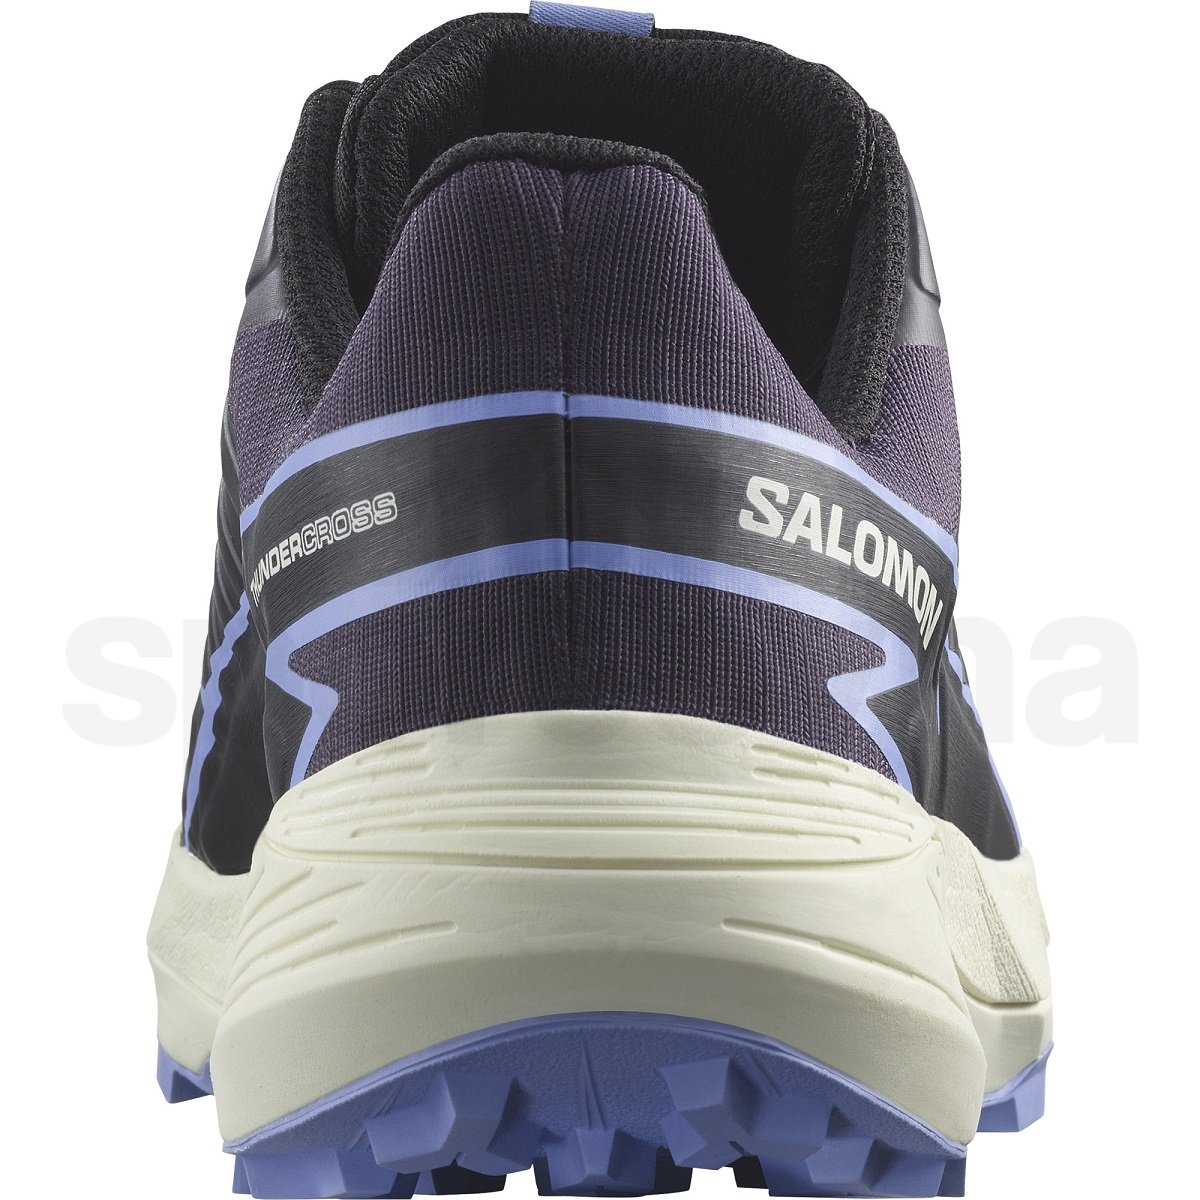 Obuv Salomon Thundercross GTX W - černá/fialová